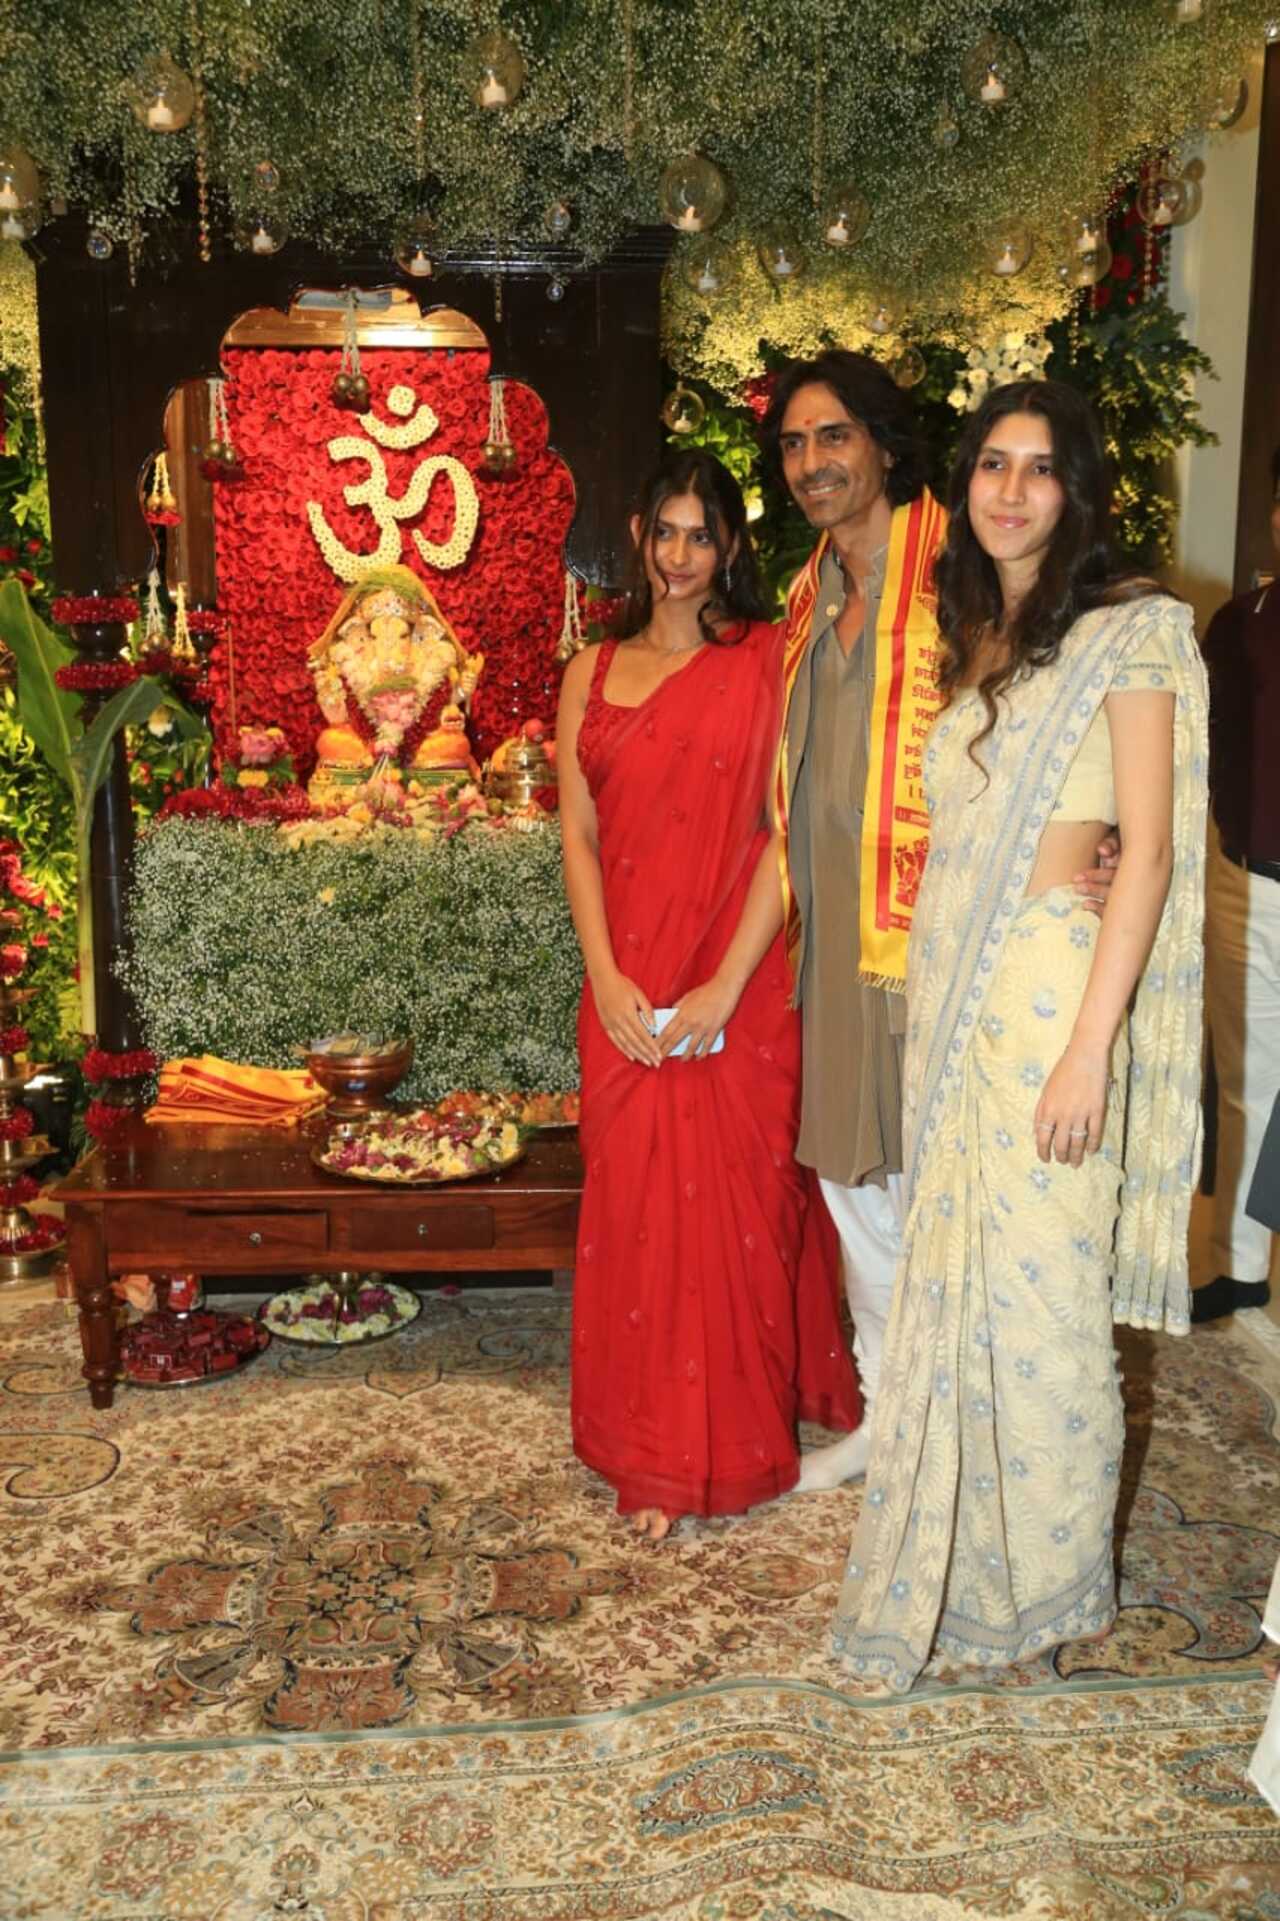 Arjun Rampal was at Mr Shinde's residence with his daughters Mahikaa and Myra